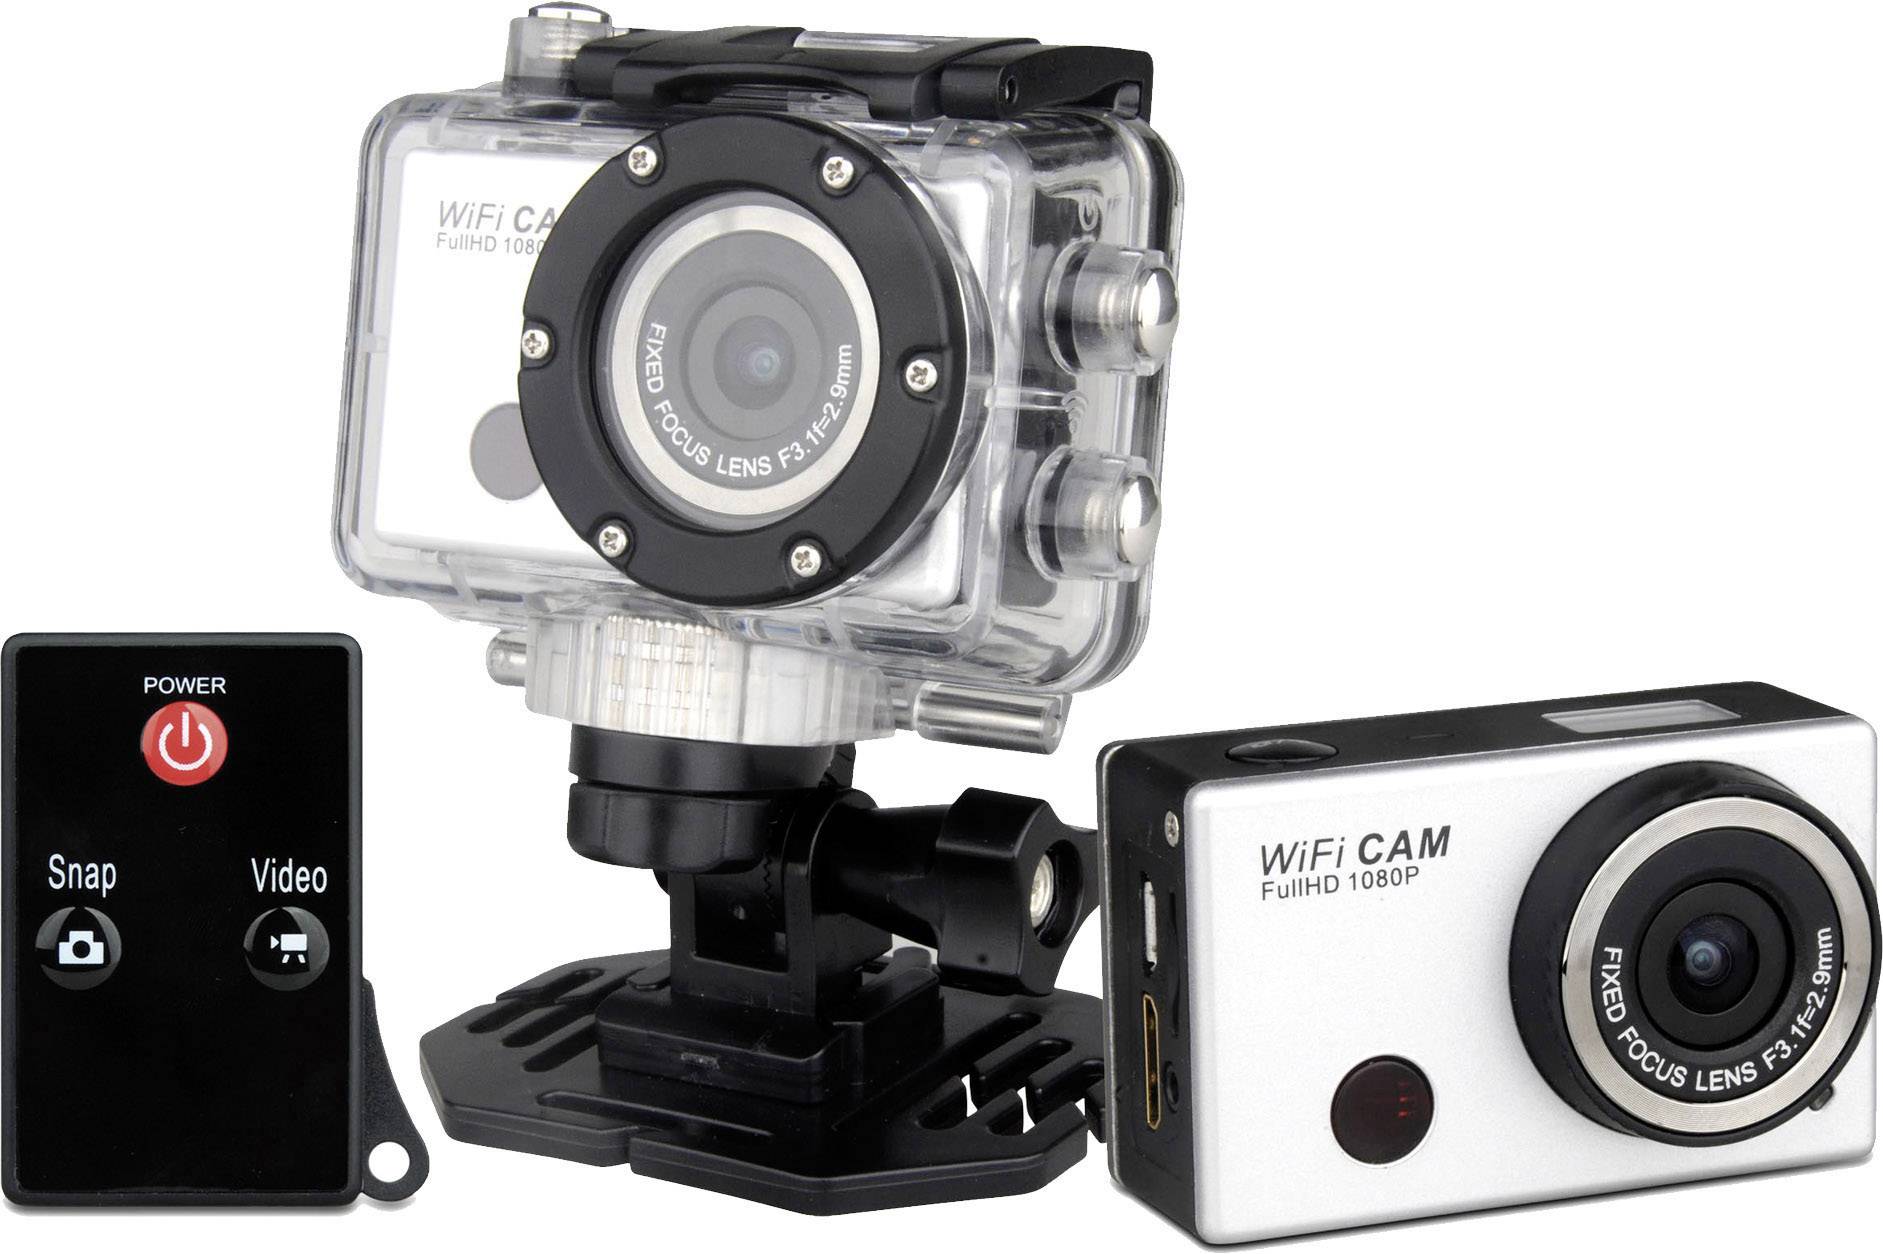 Denver AC-5000 W Action camera Web cam, Waterproof, Full HD, Wi-Fi | Conrad.com